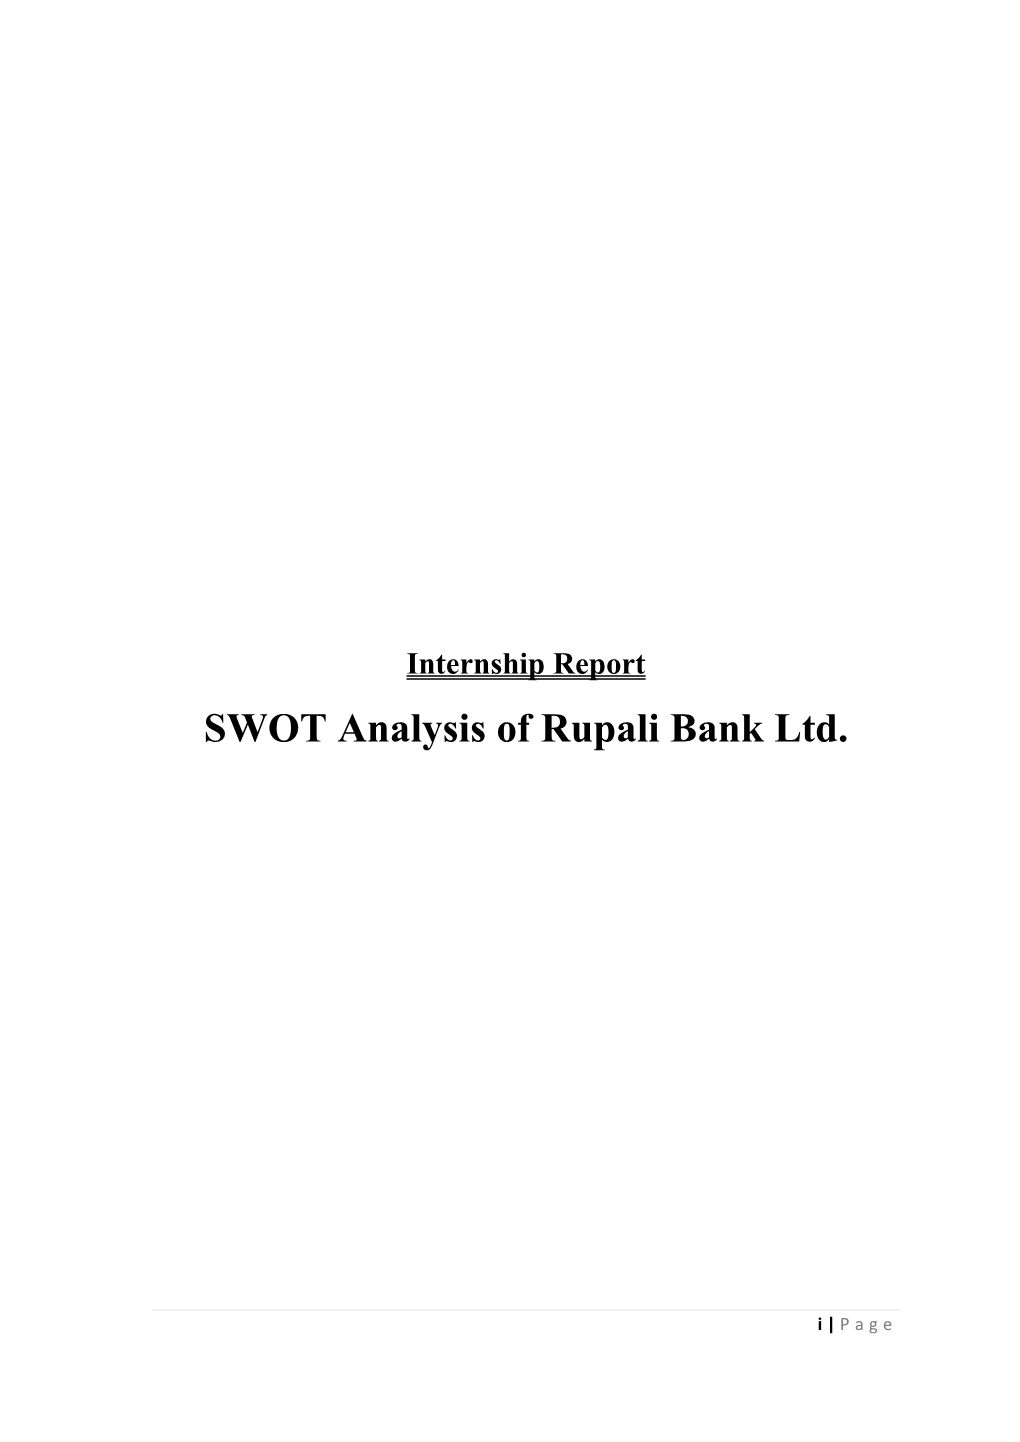 SWOT Analysis of Rupali Bank Ltd